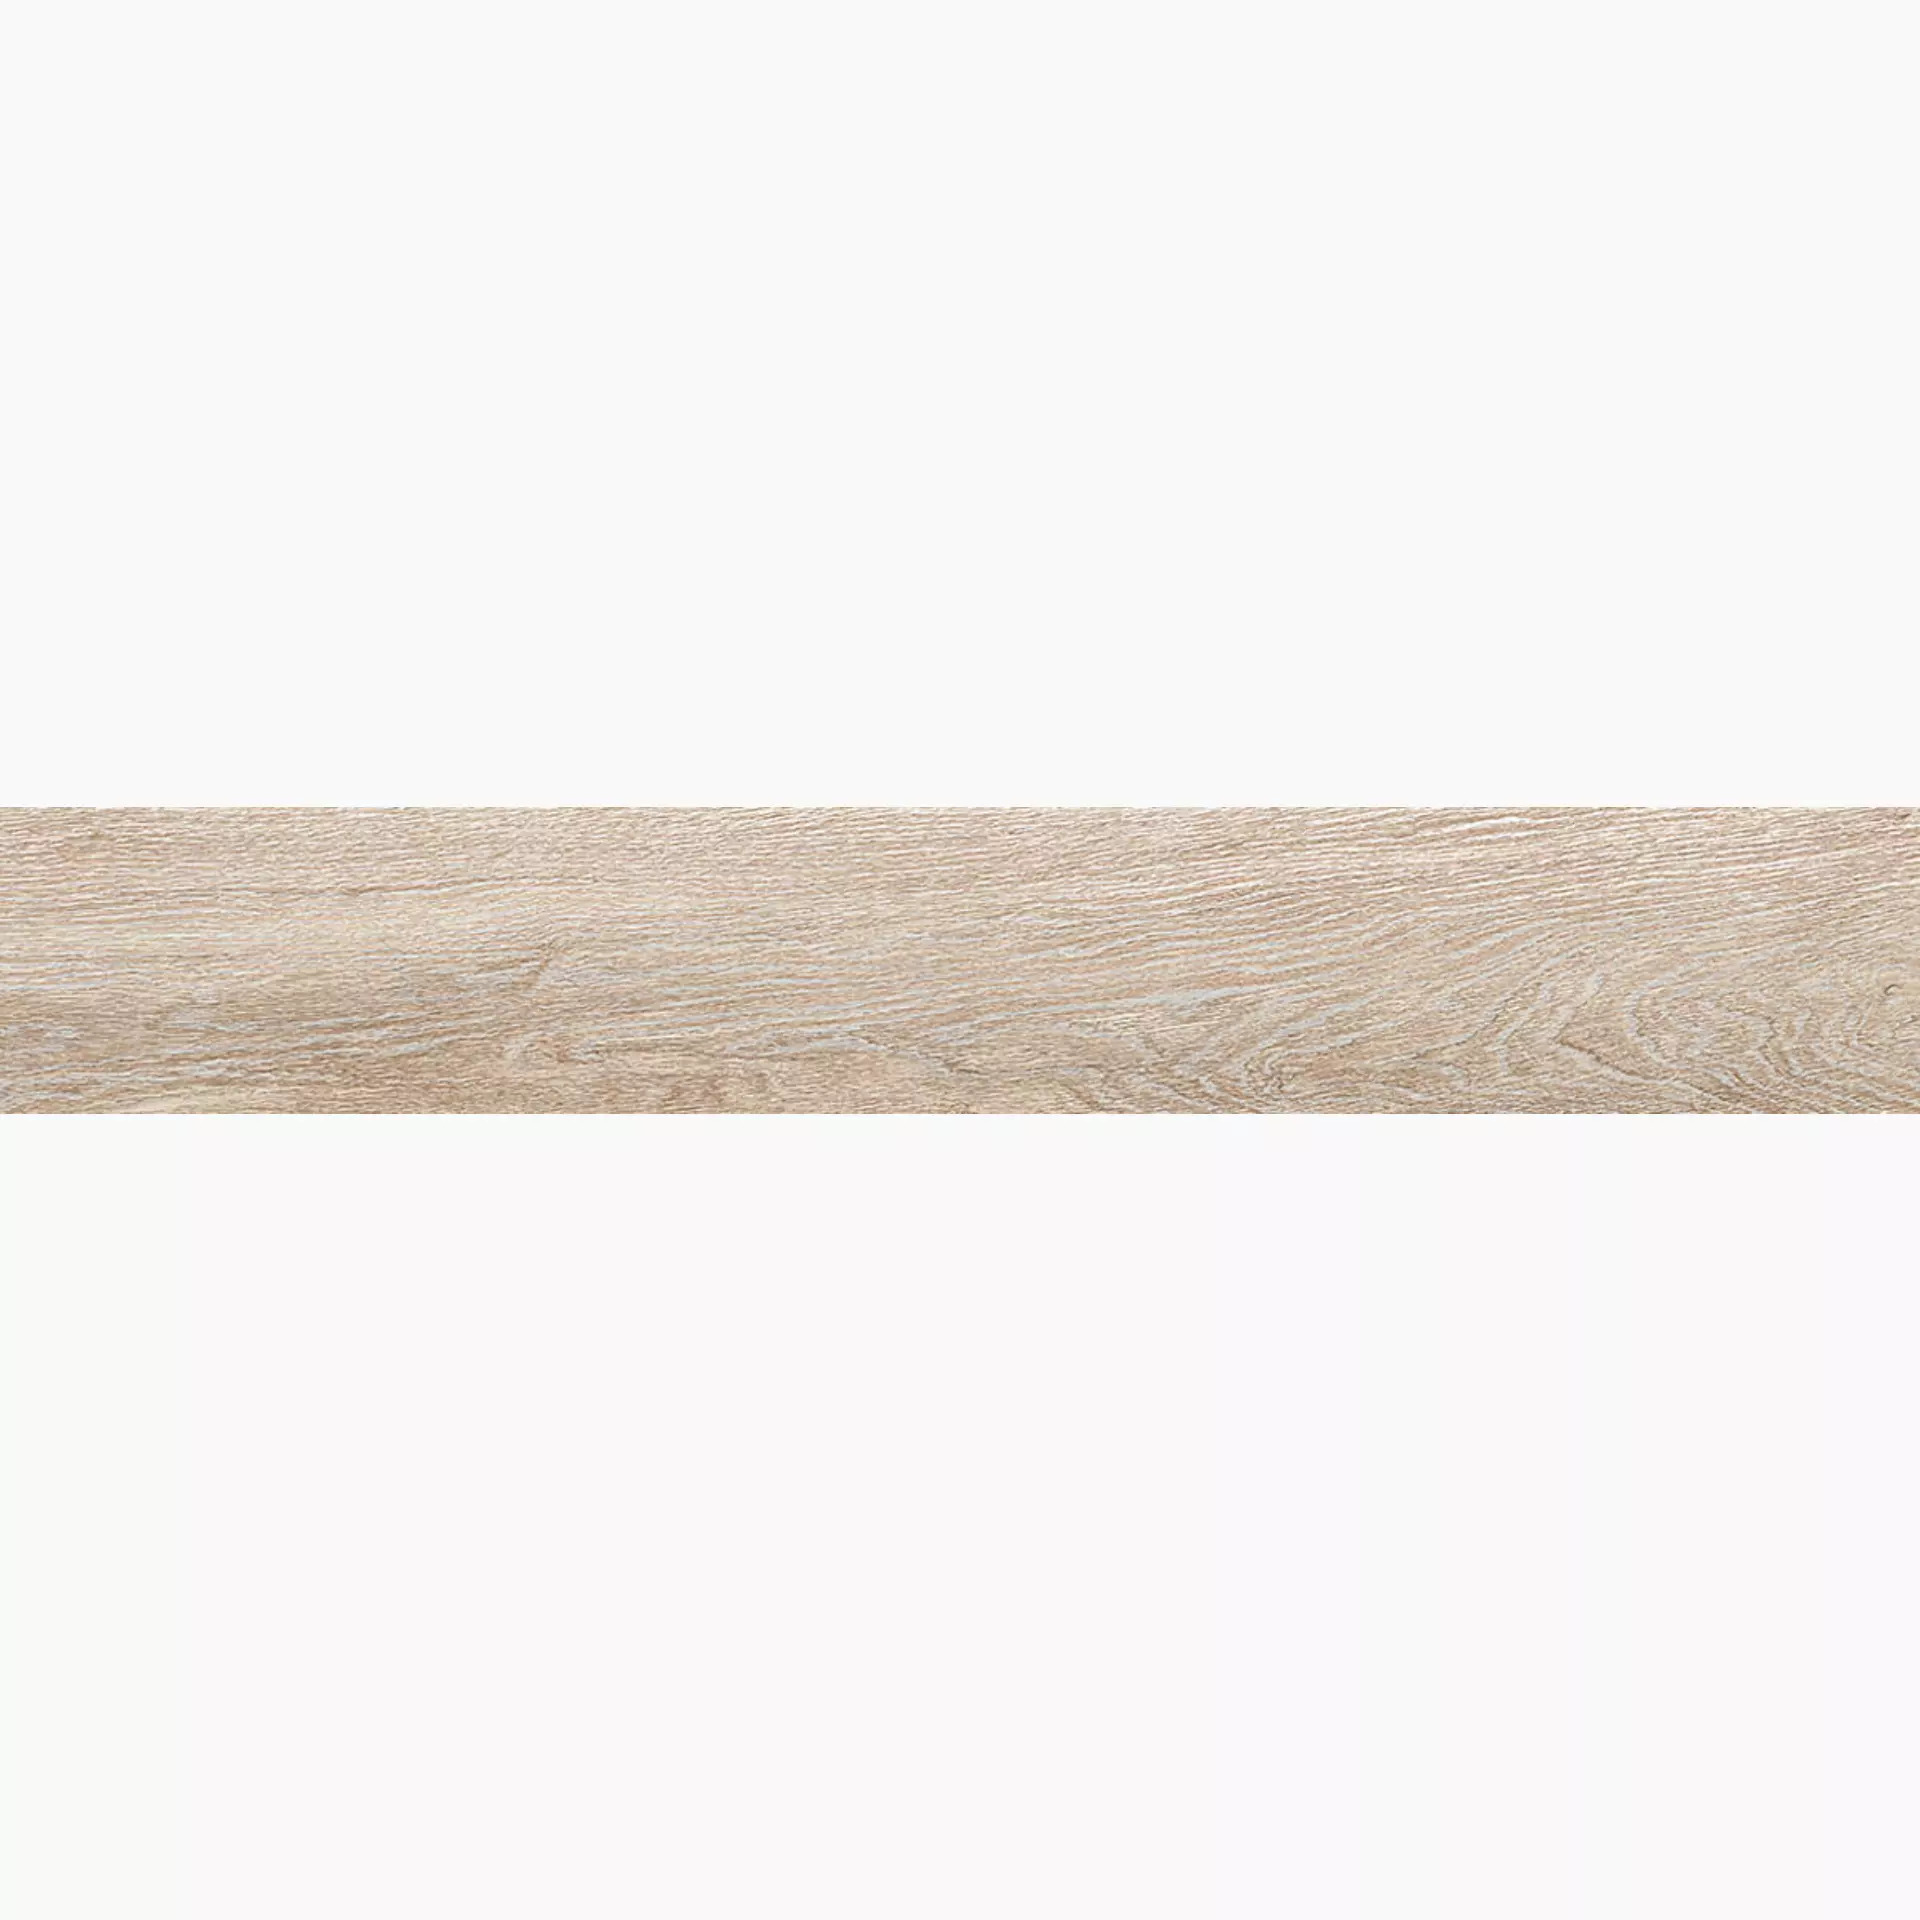 La Faenza Legno Beige Natural Slate Cut Matt 168054 20x120cm rectified 10mm - LEGNO 2012B RM